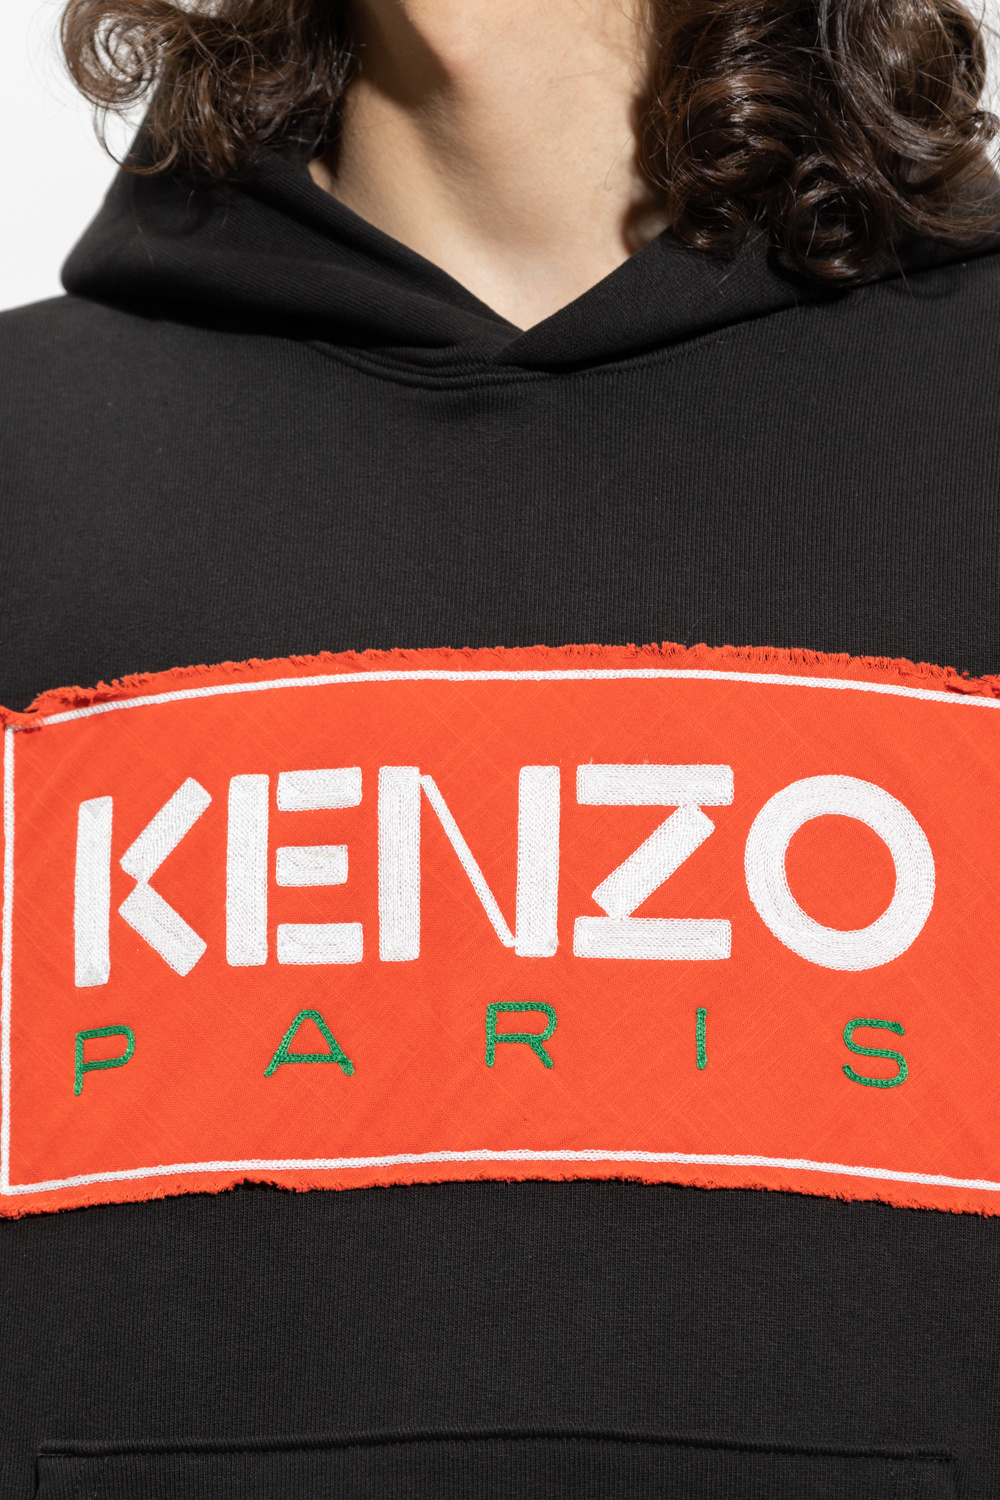 Kenzo T-SHIRT hoodie with logo